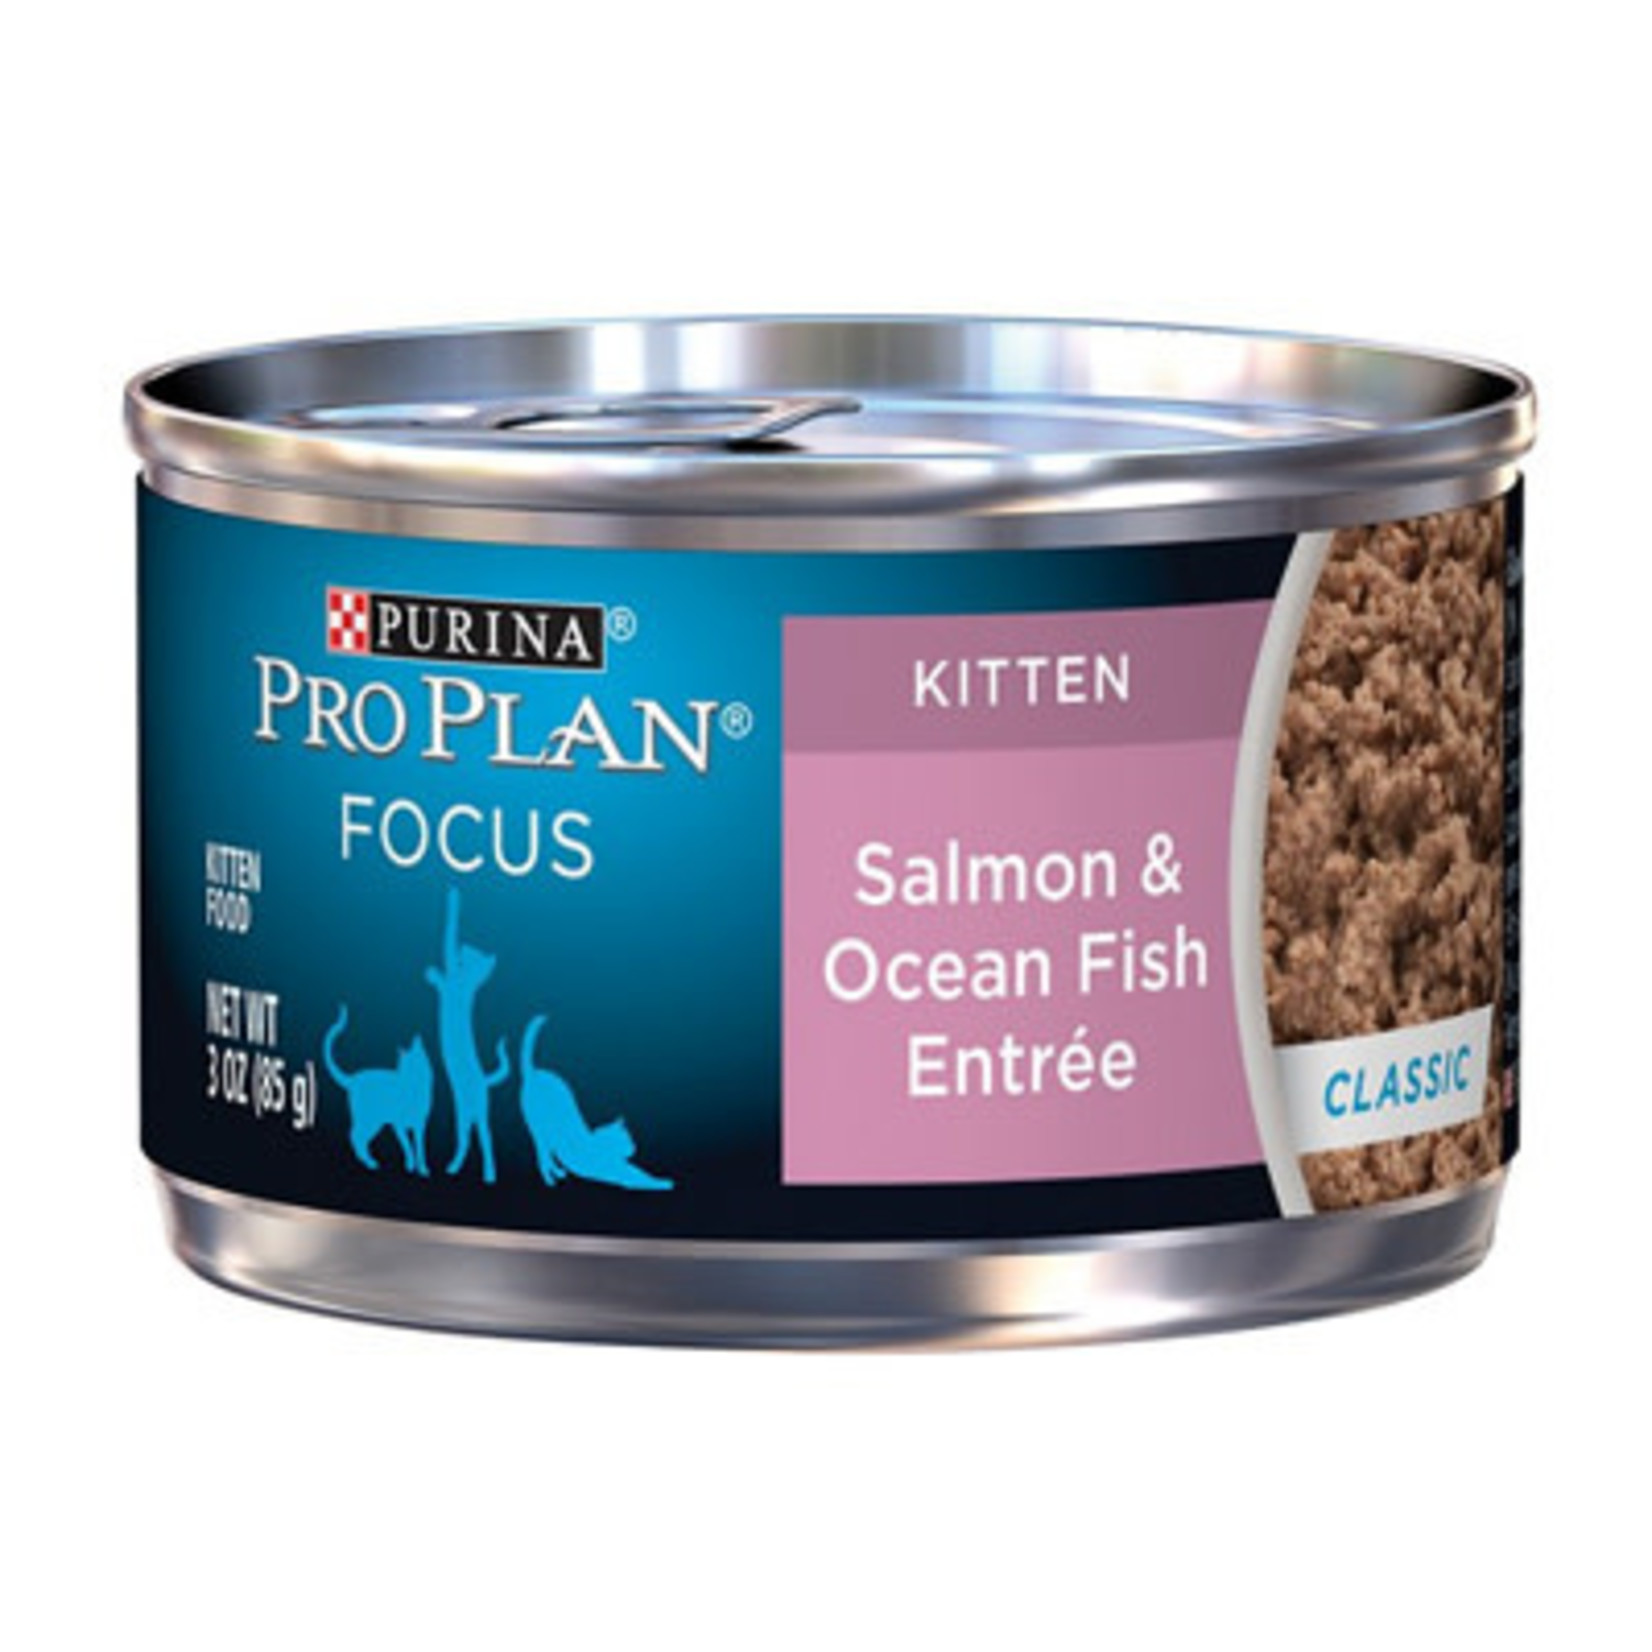 Pro Plan Focus Salmon & Ocean Fish Entree Kitten 3oz Pro Plan